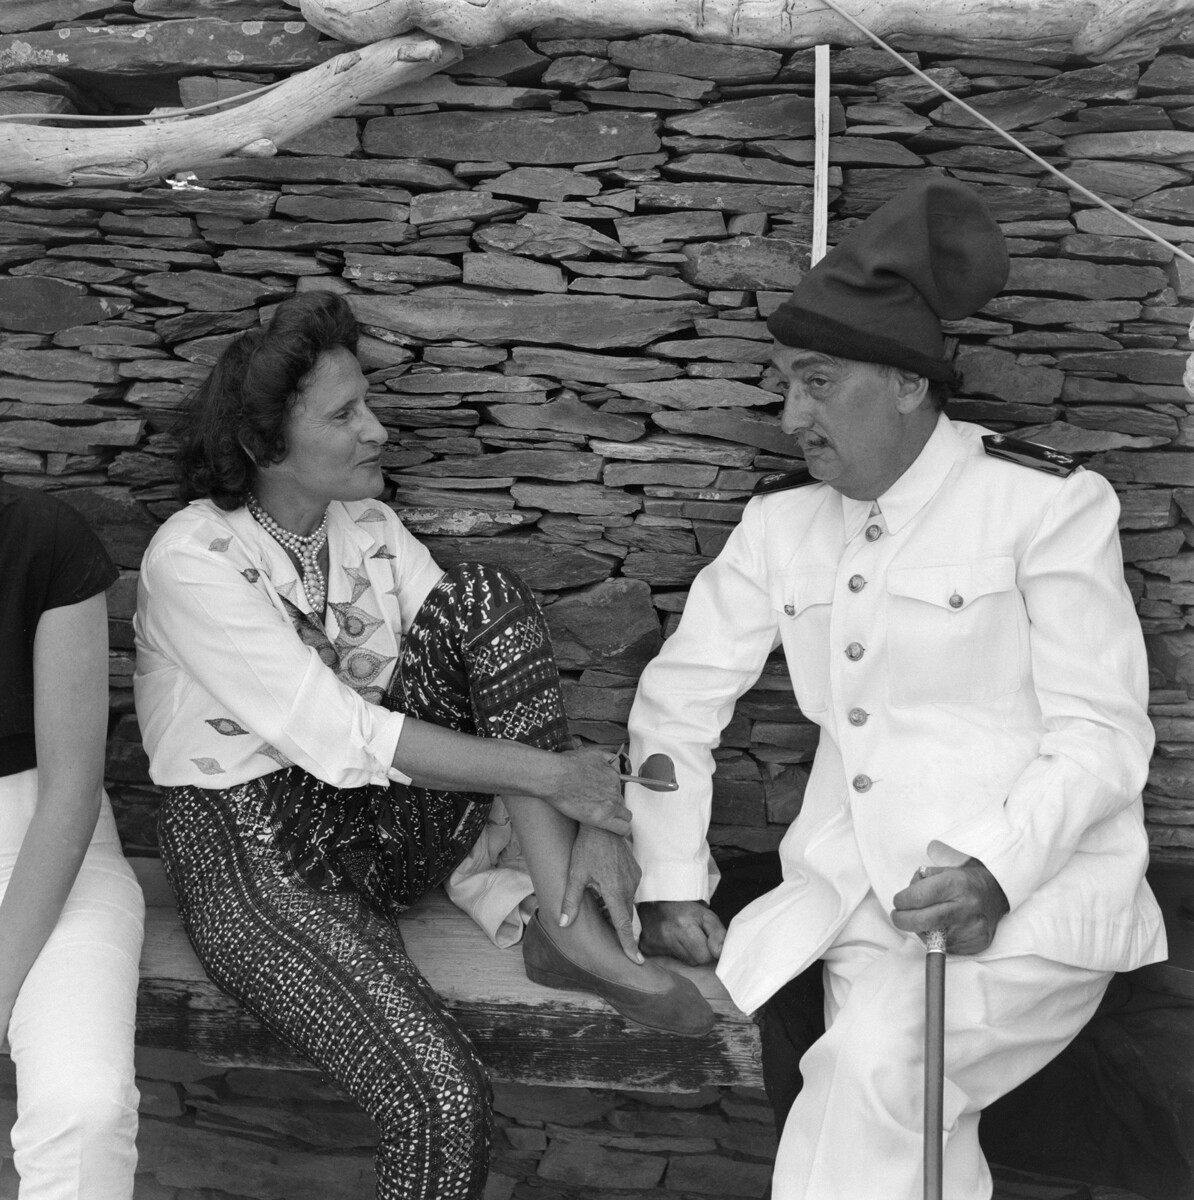  Salvador Dalí e sua moglie Gala a Port Lligat durante le riprese del programma “Close-up” a lui dedicato